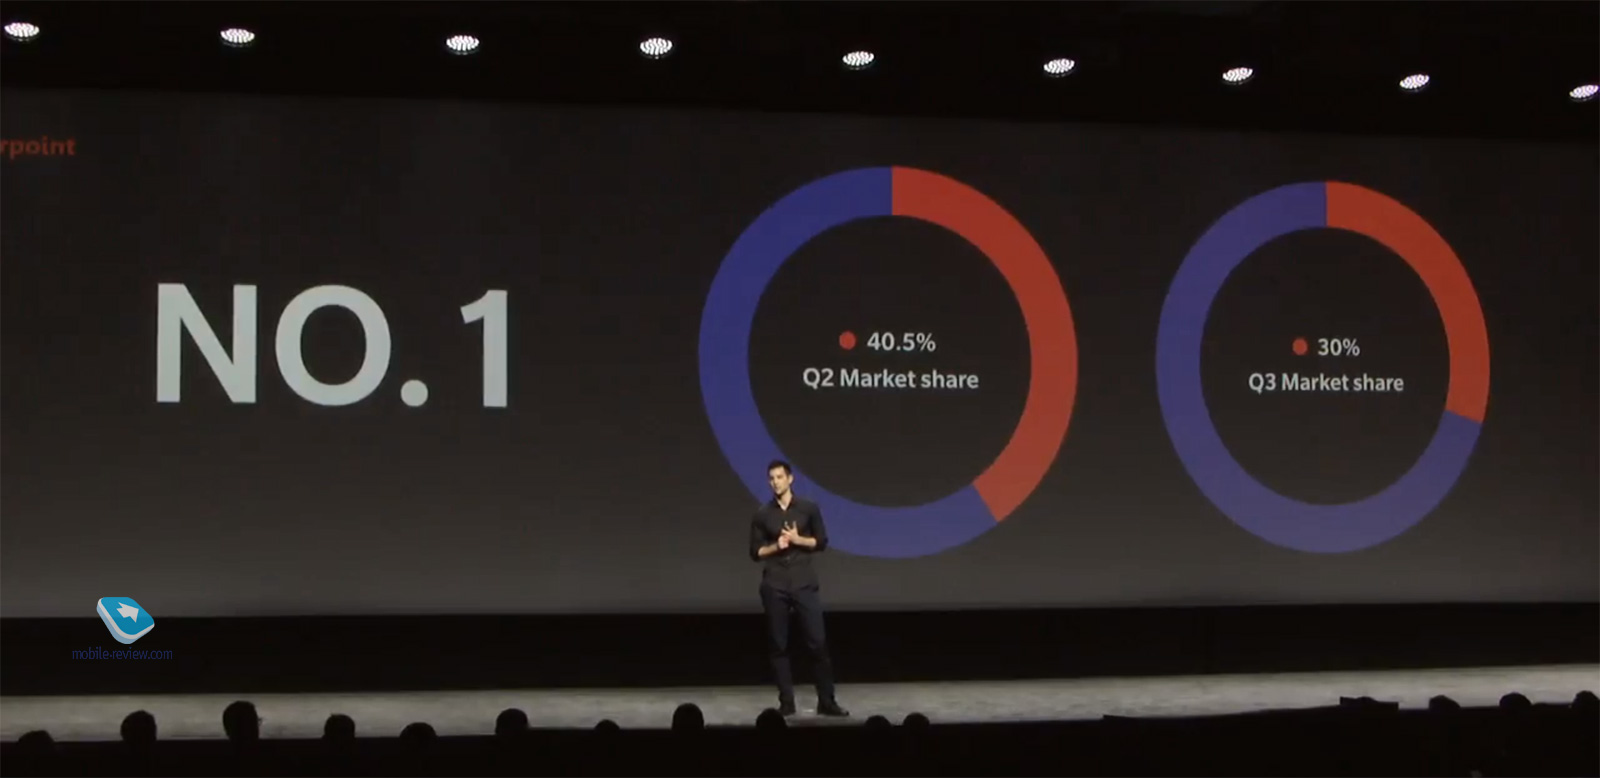  OnePlus 6T